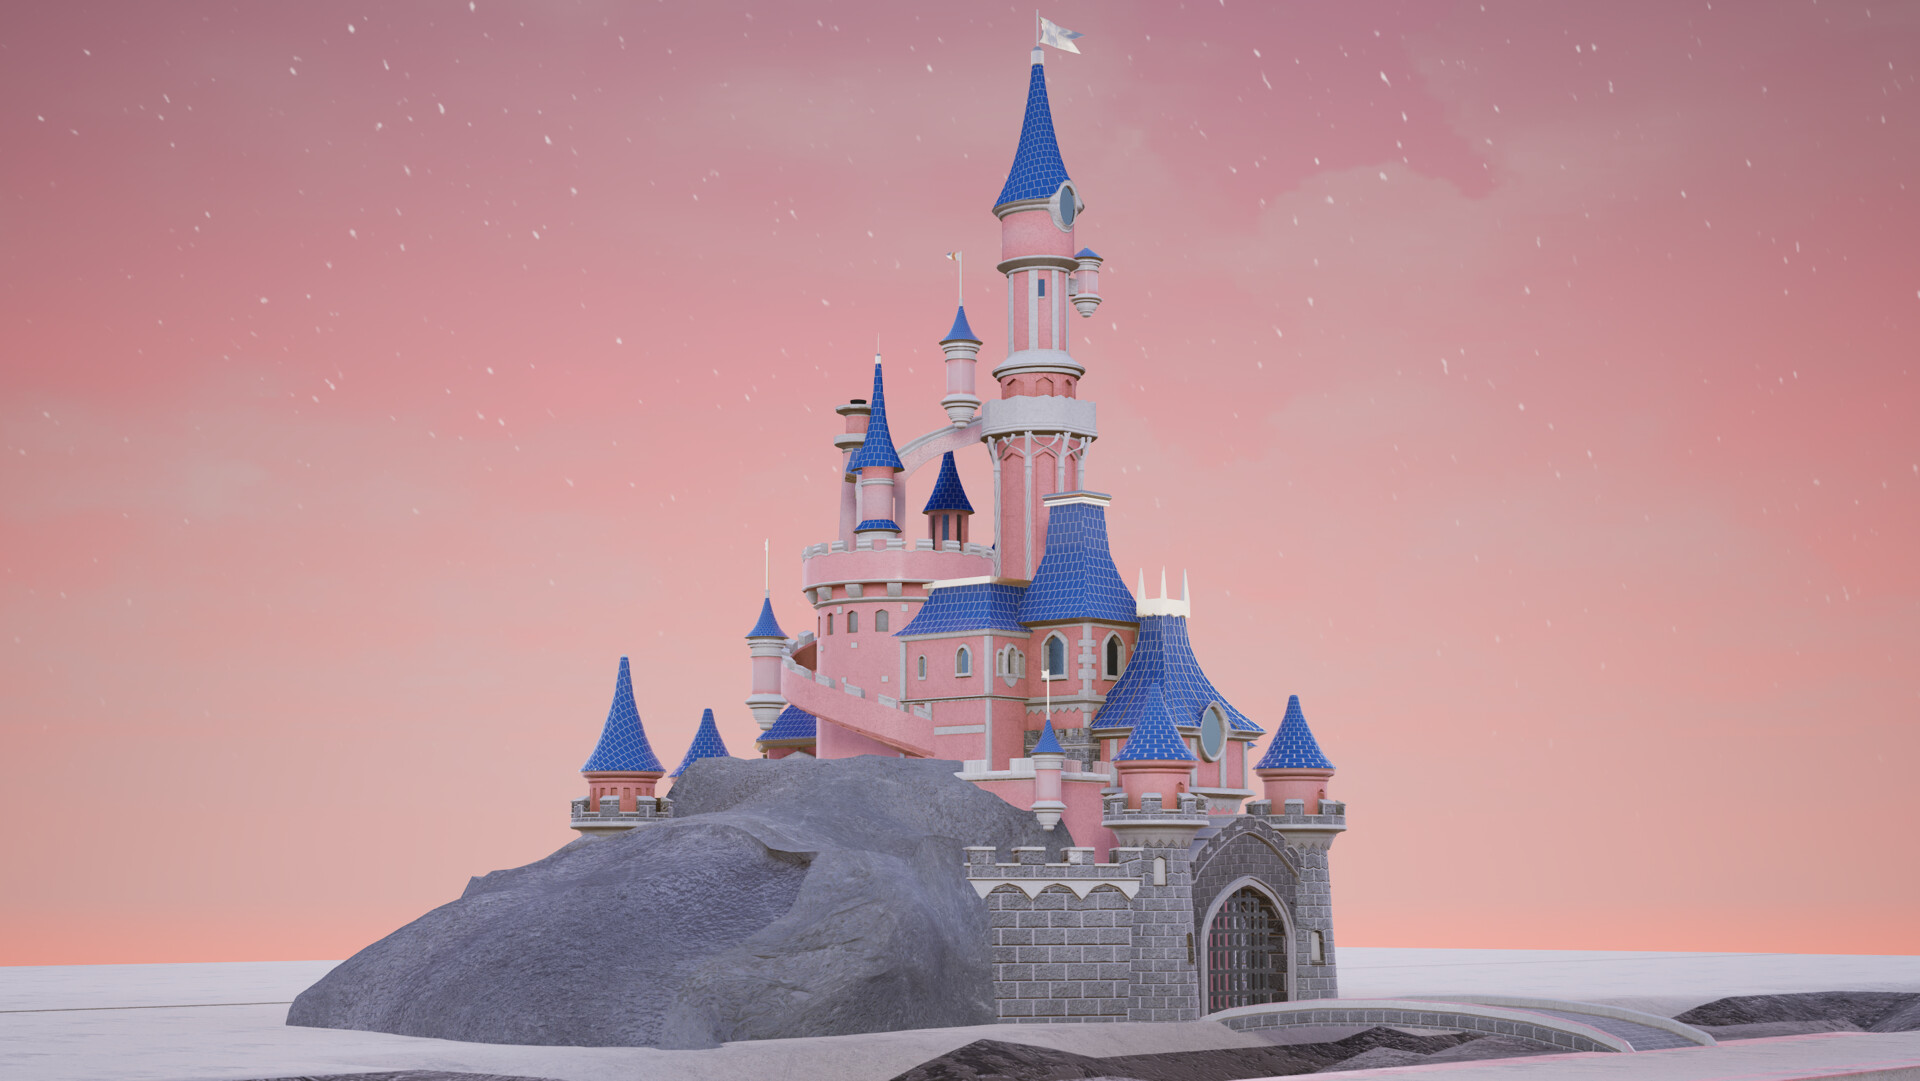 Disneyland paris castle by ColineKD on DeviantArt